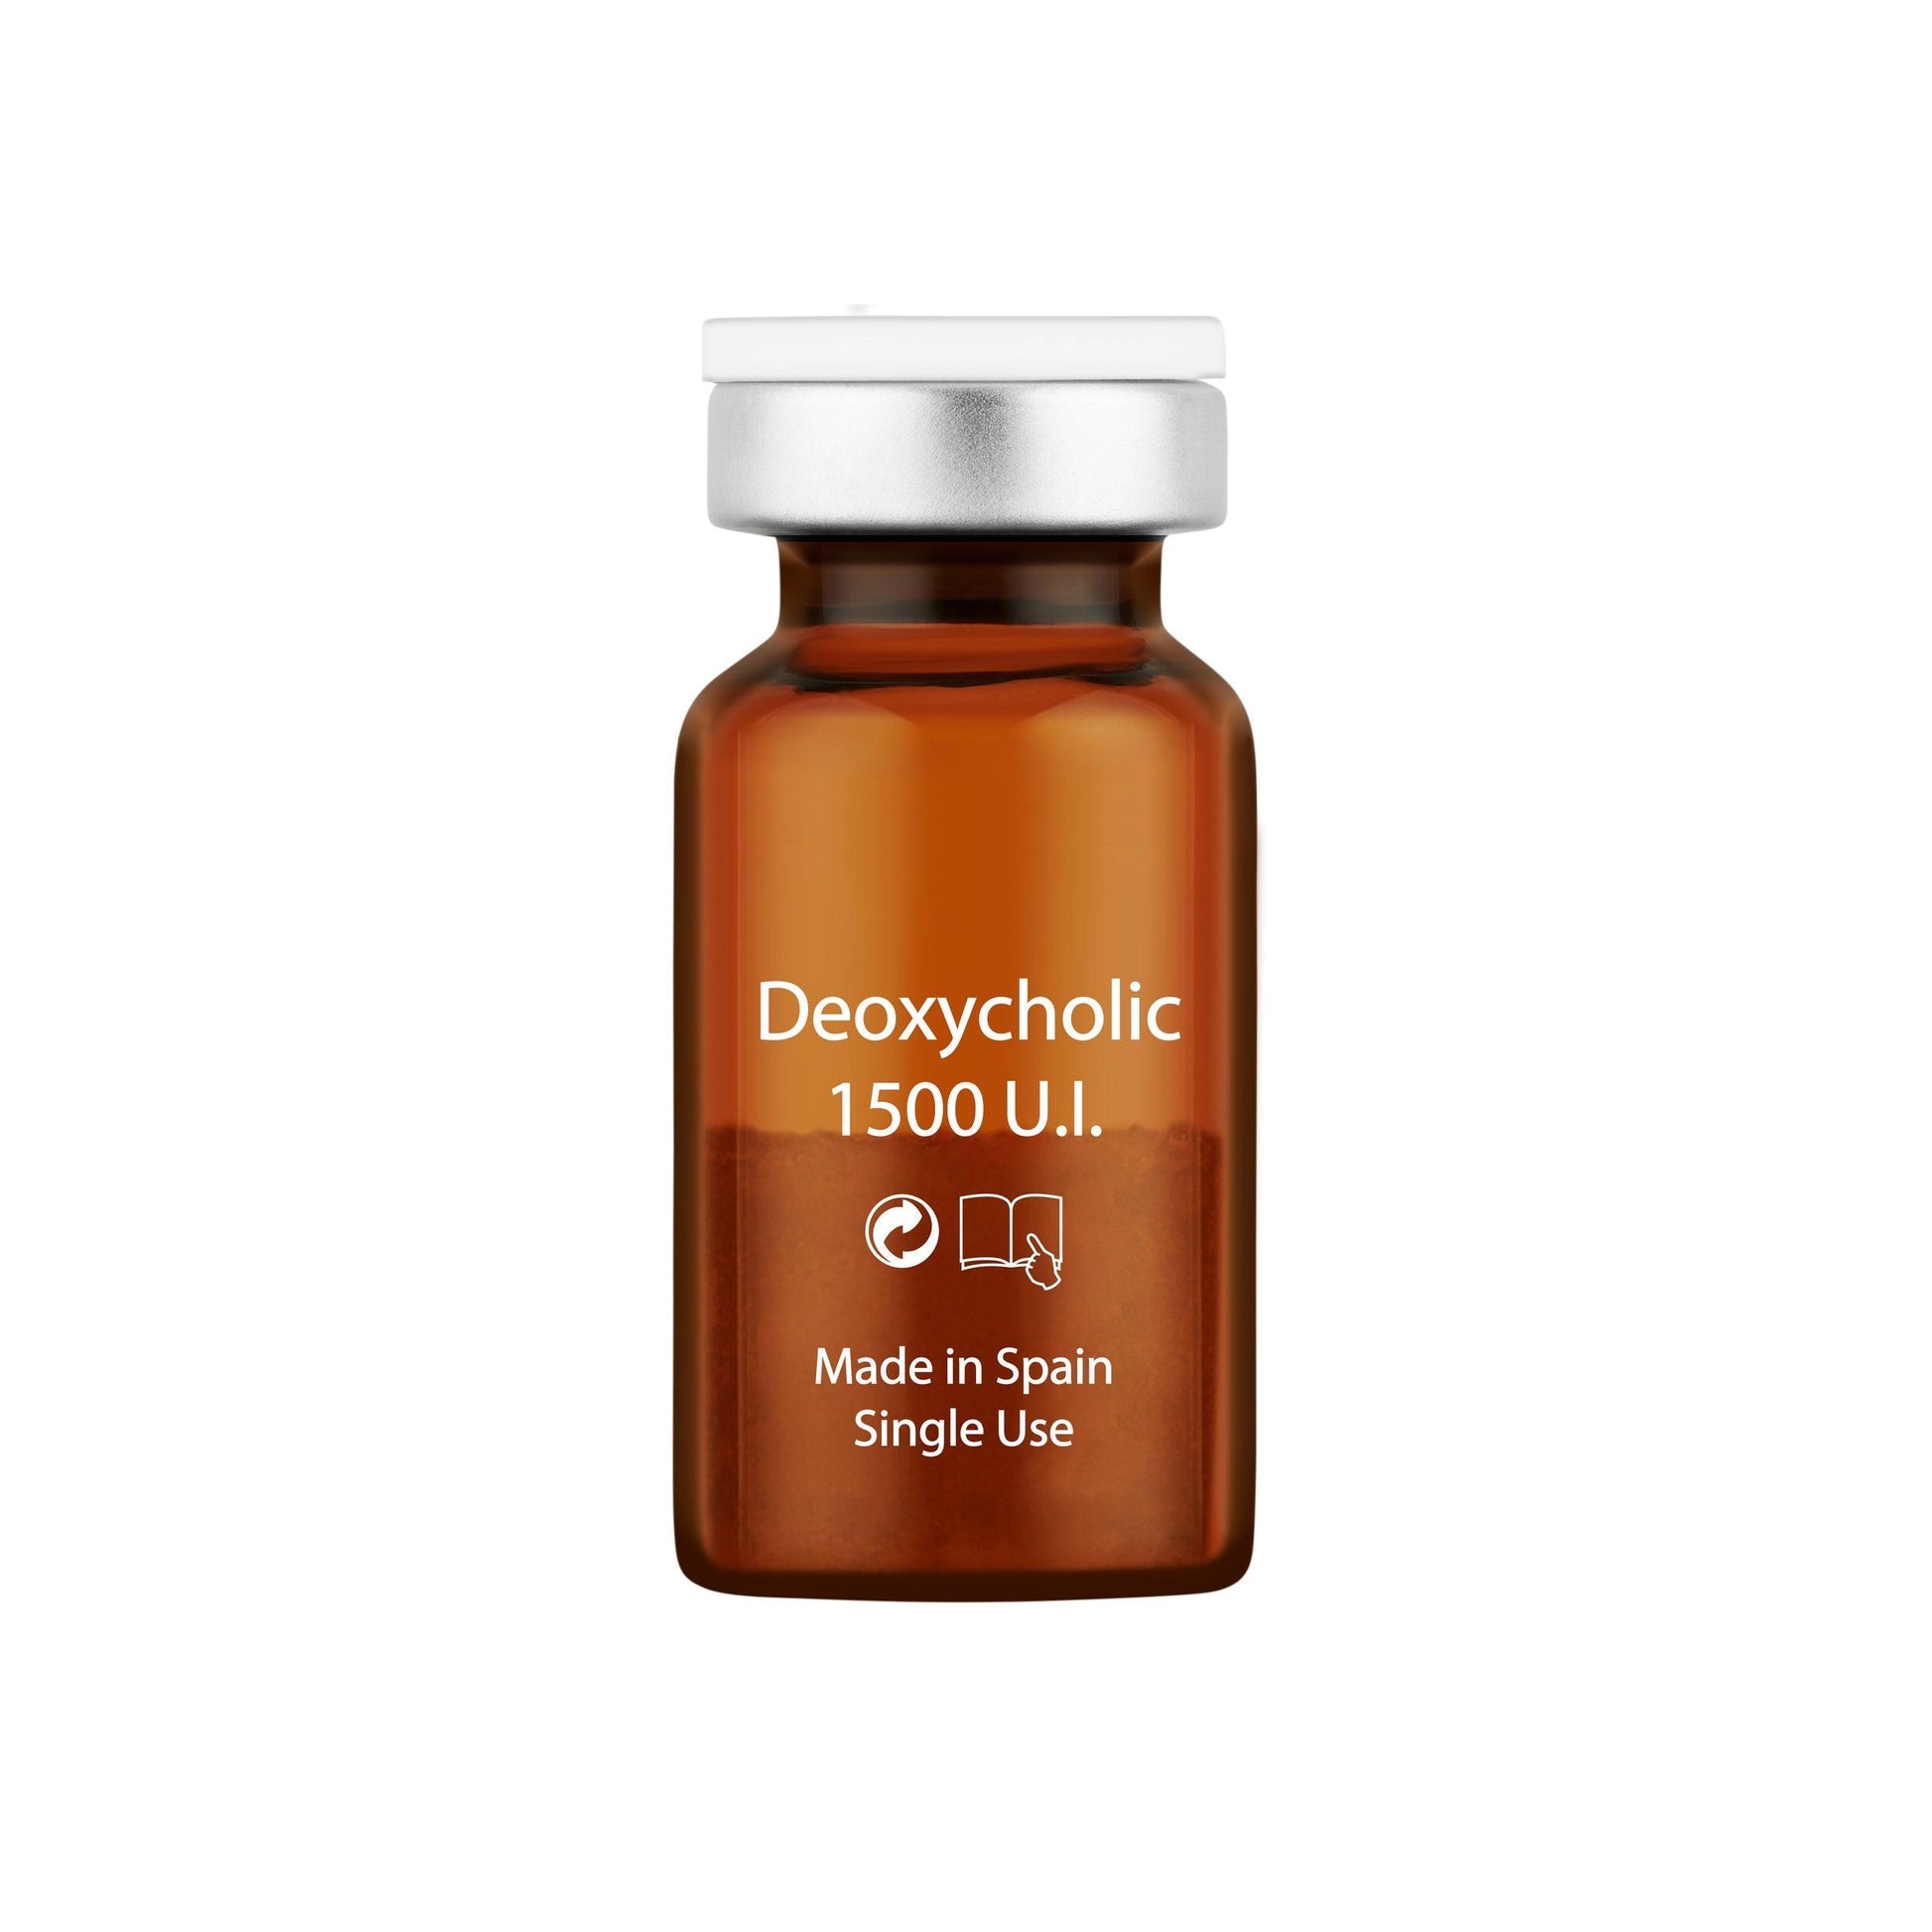 Deoxycholic 1500 U.I. - MCCM Medical Cosmetics